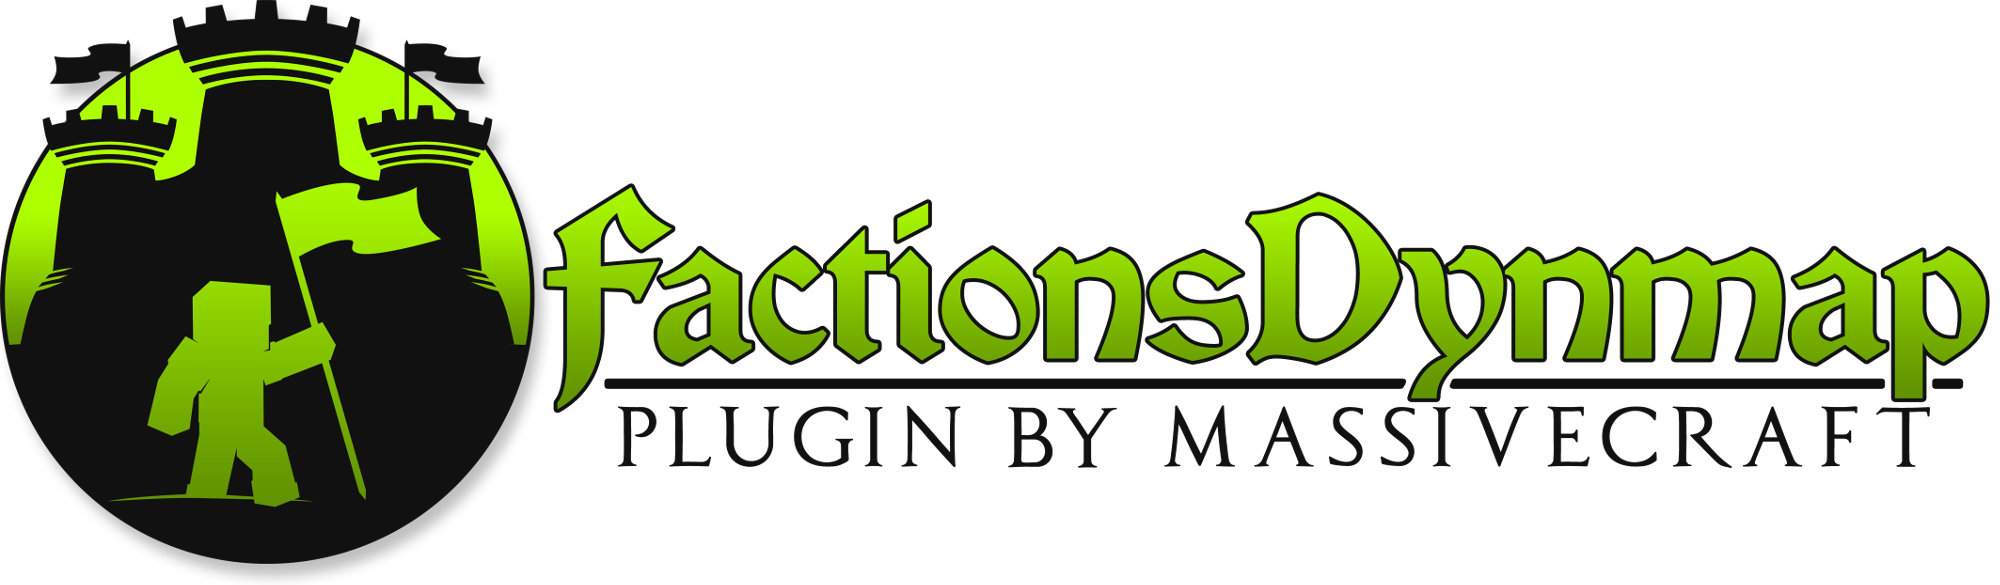 massivecraft-logotype-plugin-factionsdynmap-2000.jpg